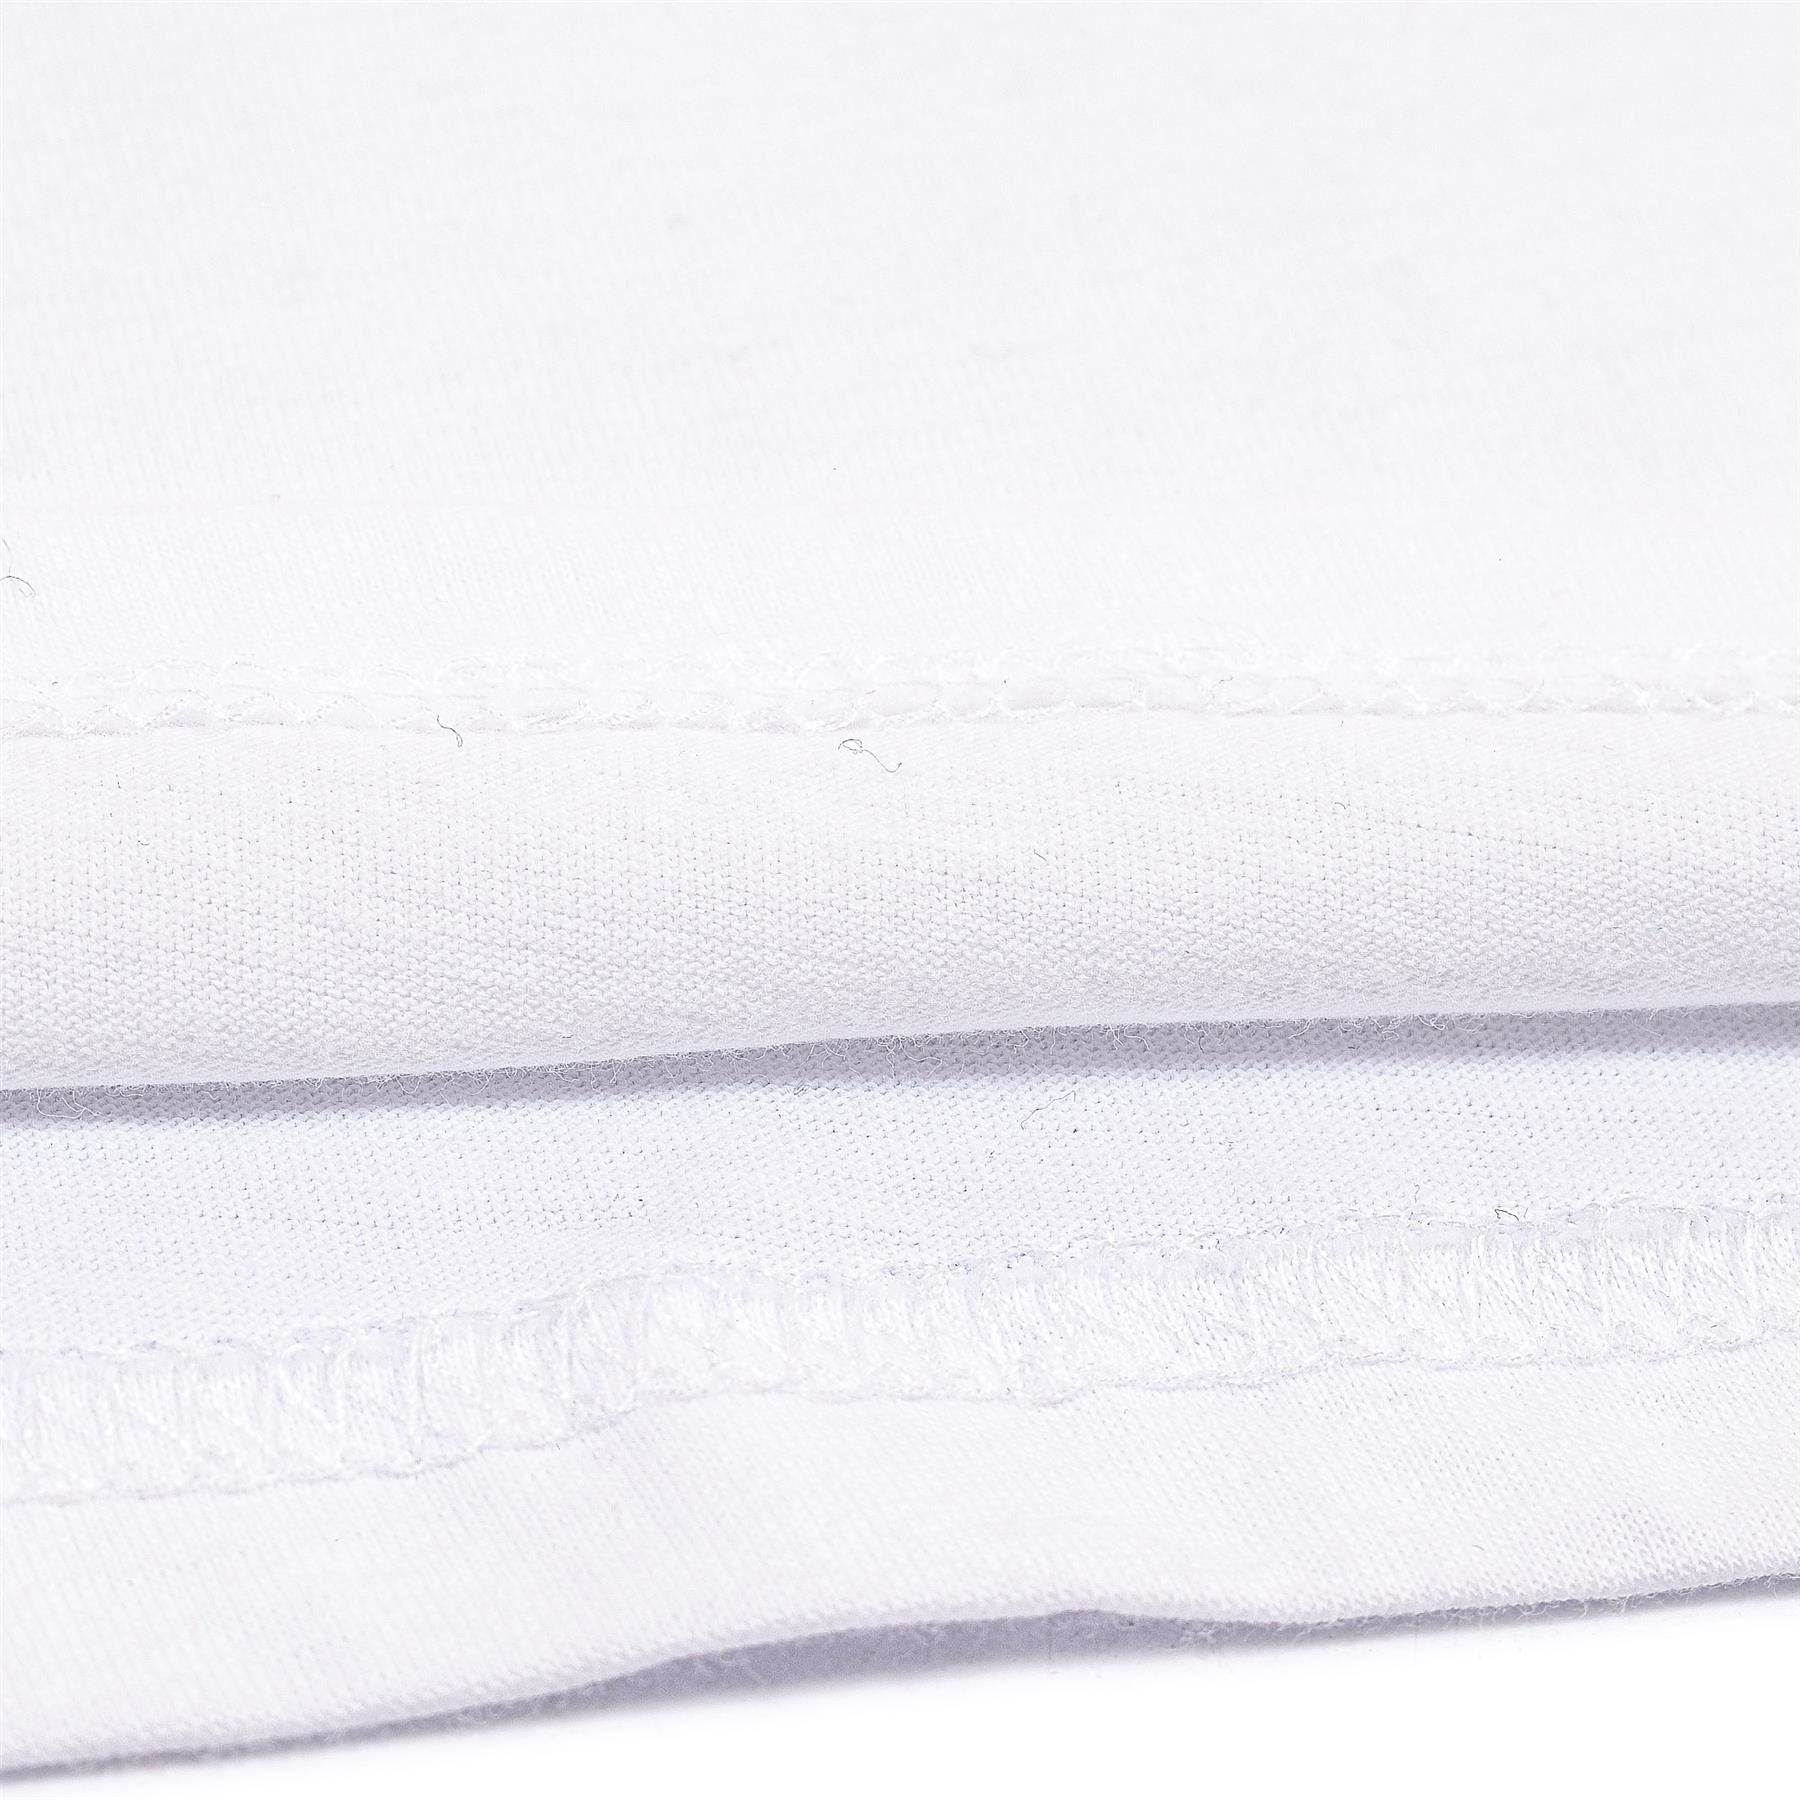 Mens 100% Combed Cotton 10 Pack White Sleeveless Underwear Vest